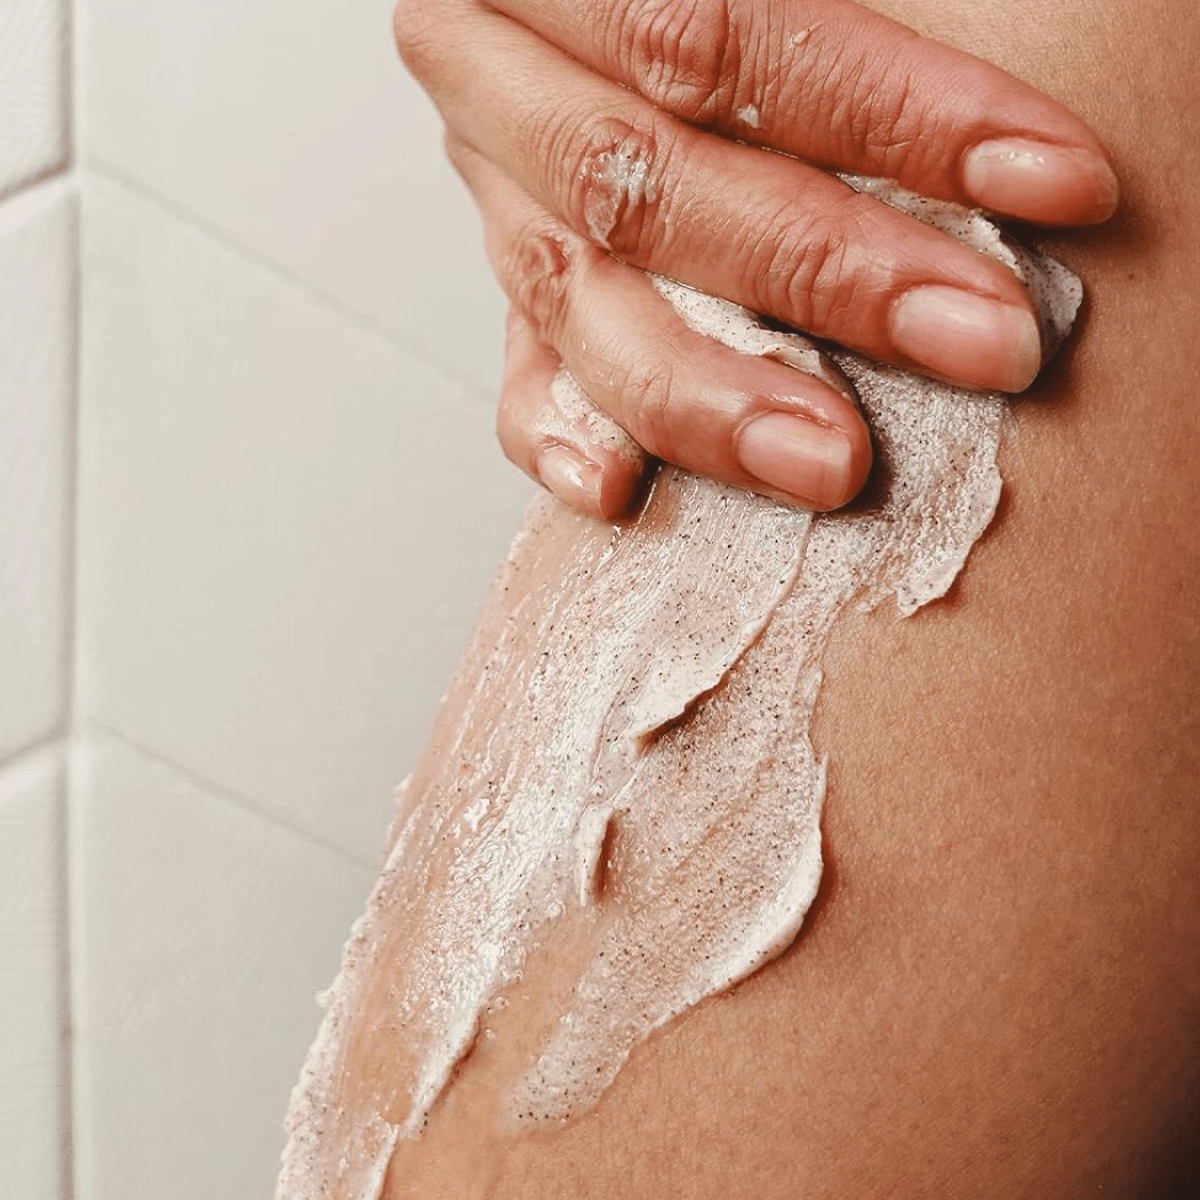 Women's leg with shave cream.